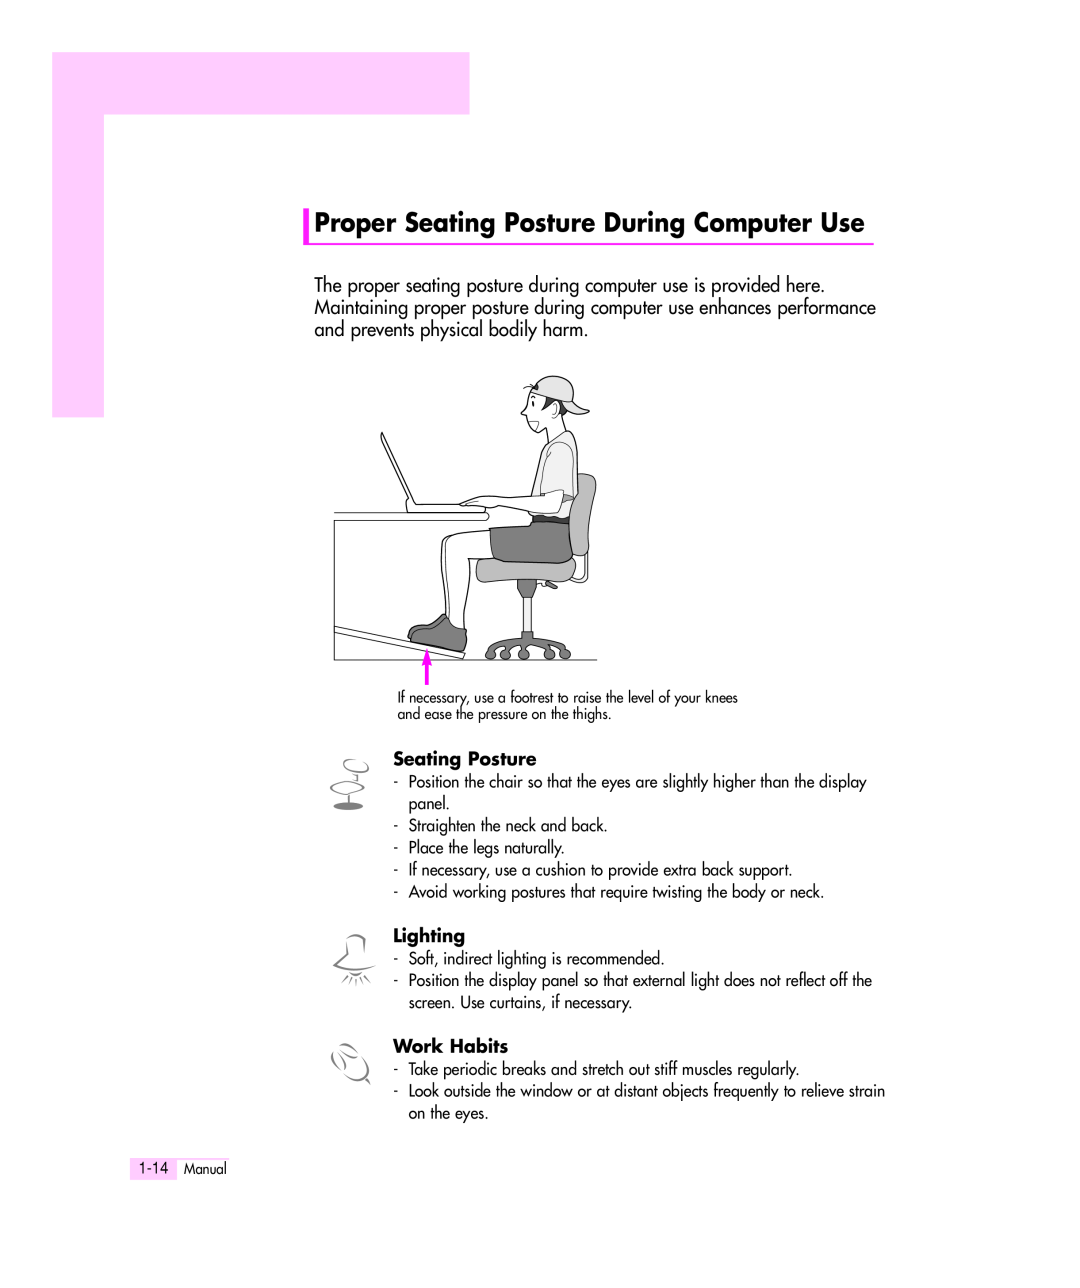 Samsung Q35 manual Proper Seating Posture During Computer Use, Lighting, Work Habits 